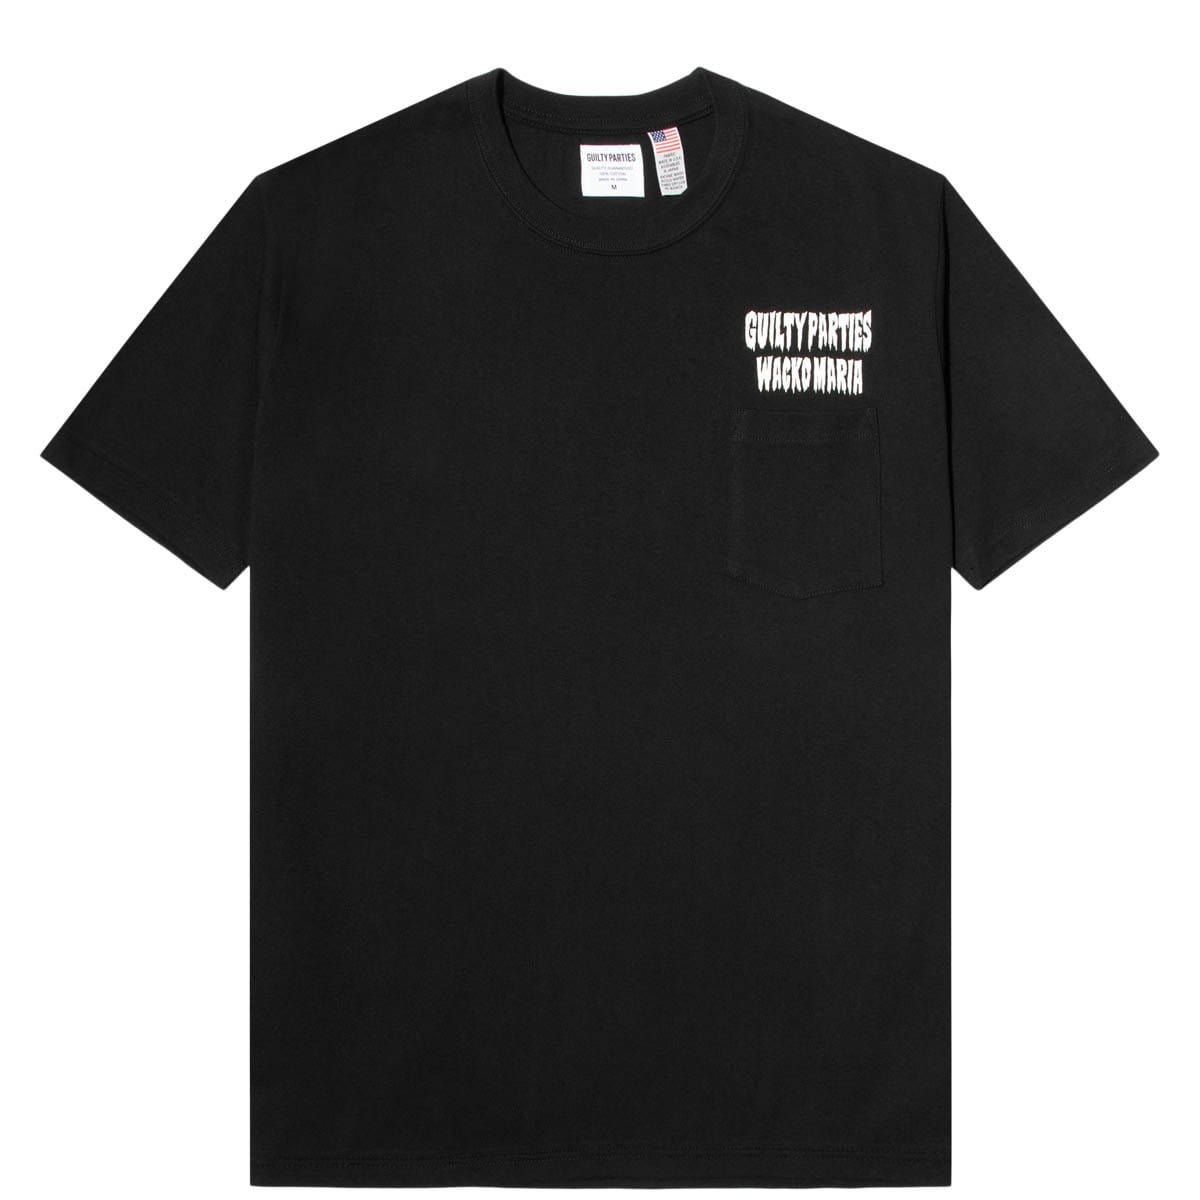 Wacko Maria T-Shirts USA BODY CREW NECK POCKET T-SHIRT ( TYPE-1 )